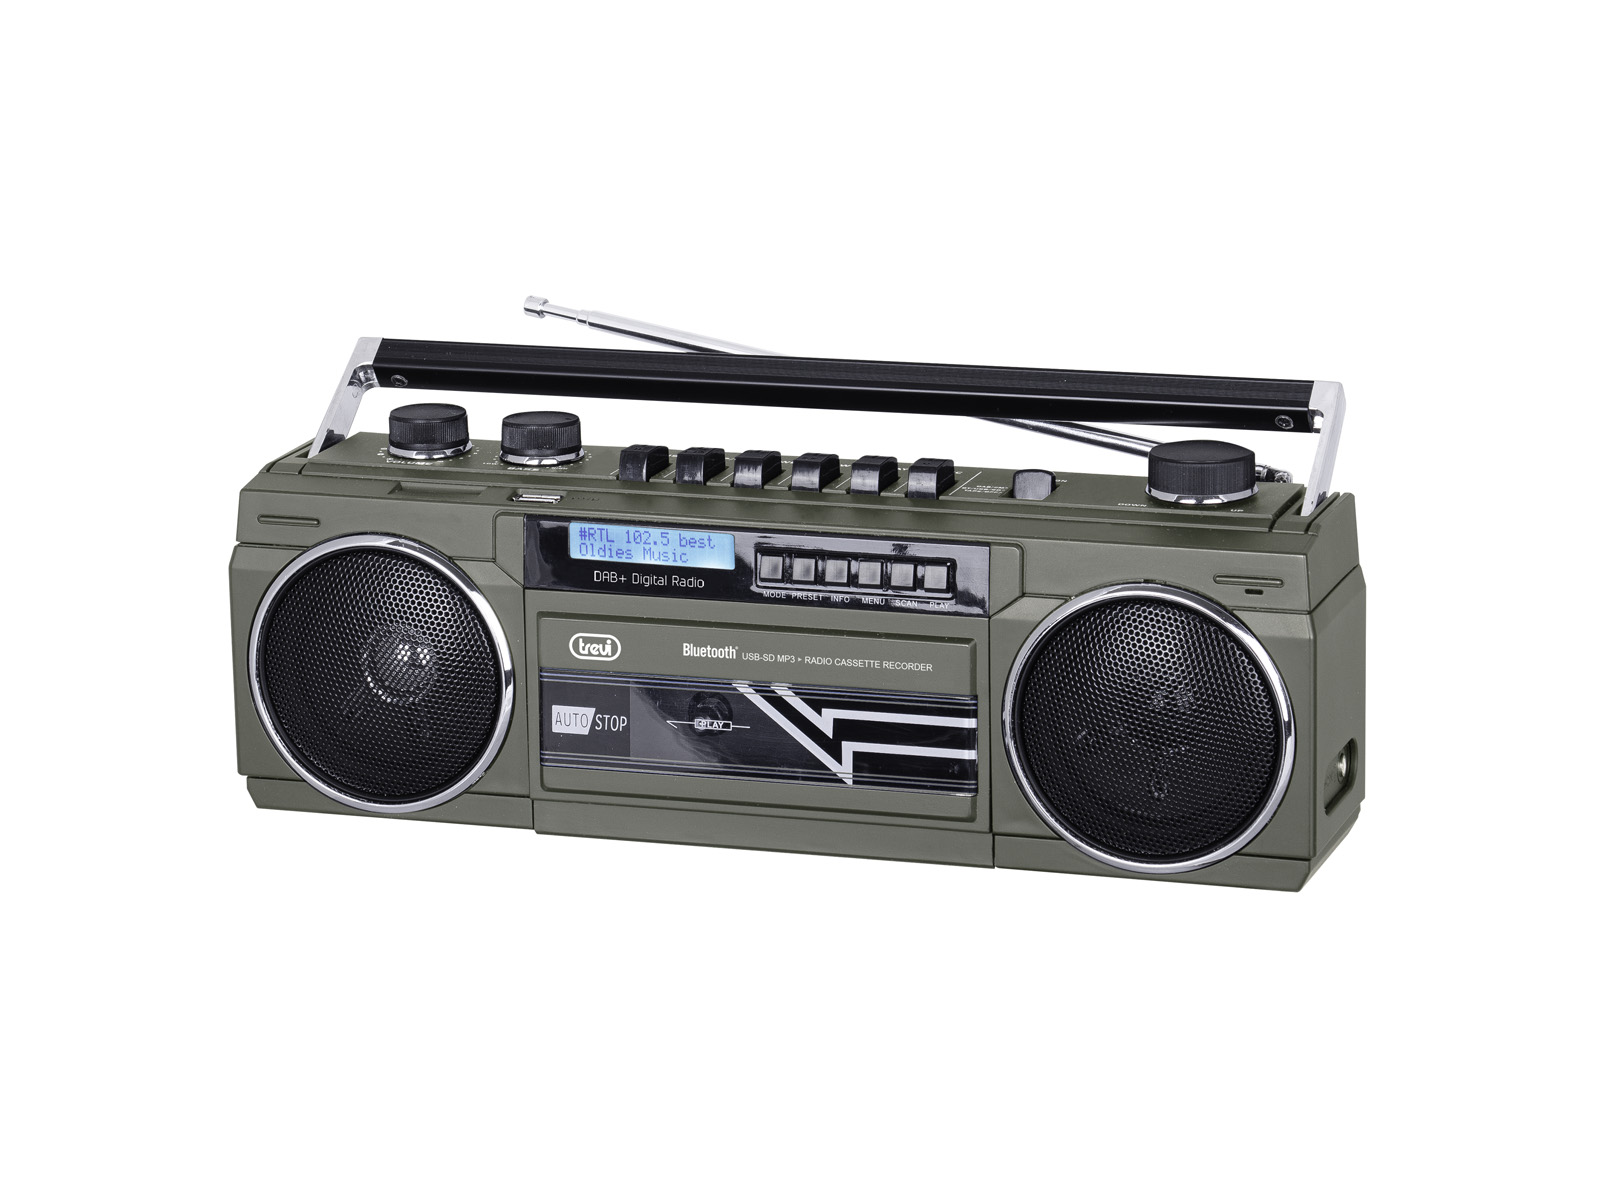 Radiorekorder DAB, Tragbarer Radio, Grau TREVI